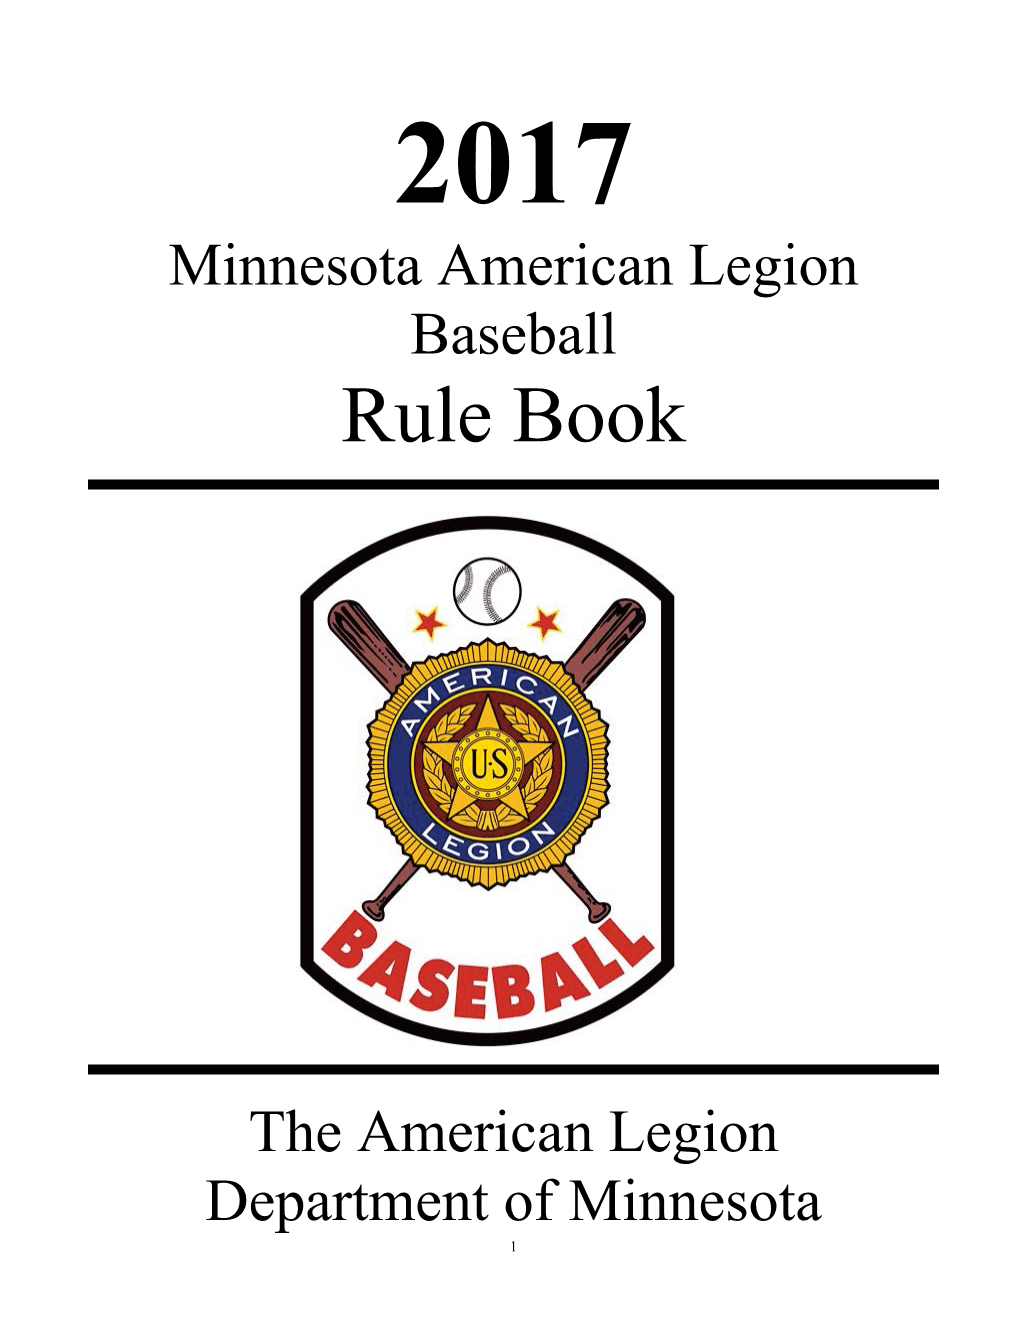 2017 Minnesota Rule Book